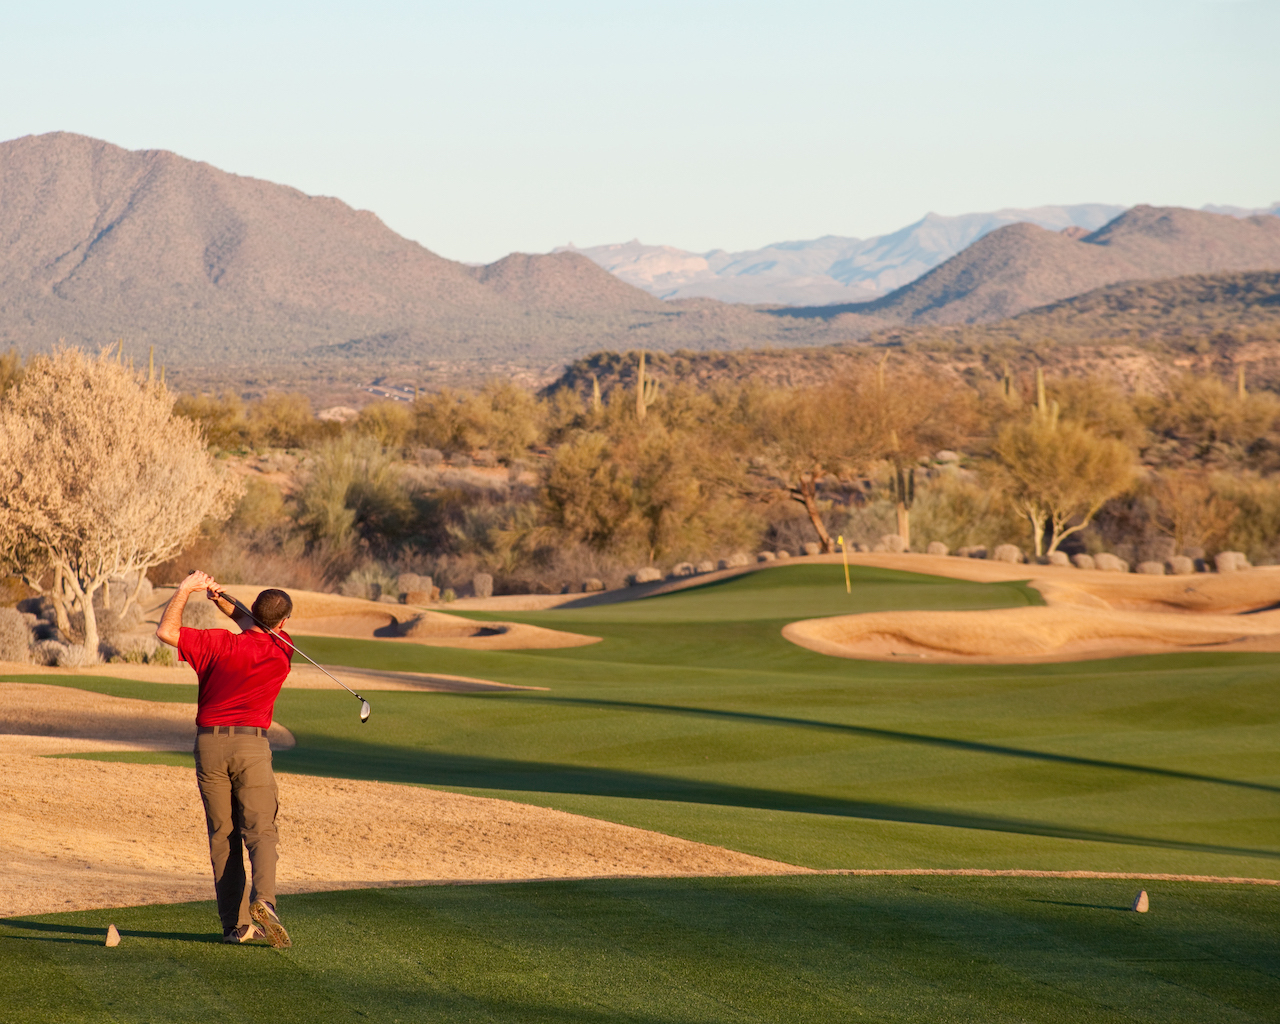 golfer teeing off on desert course